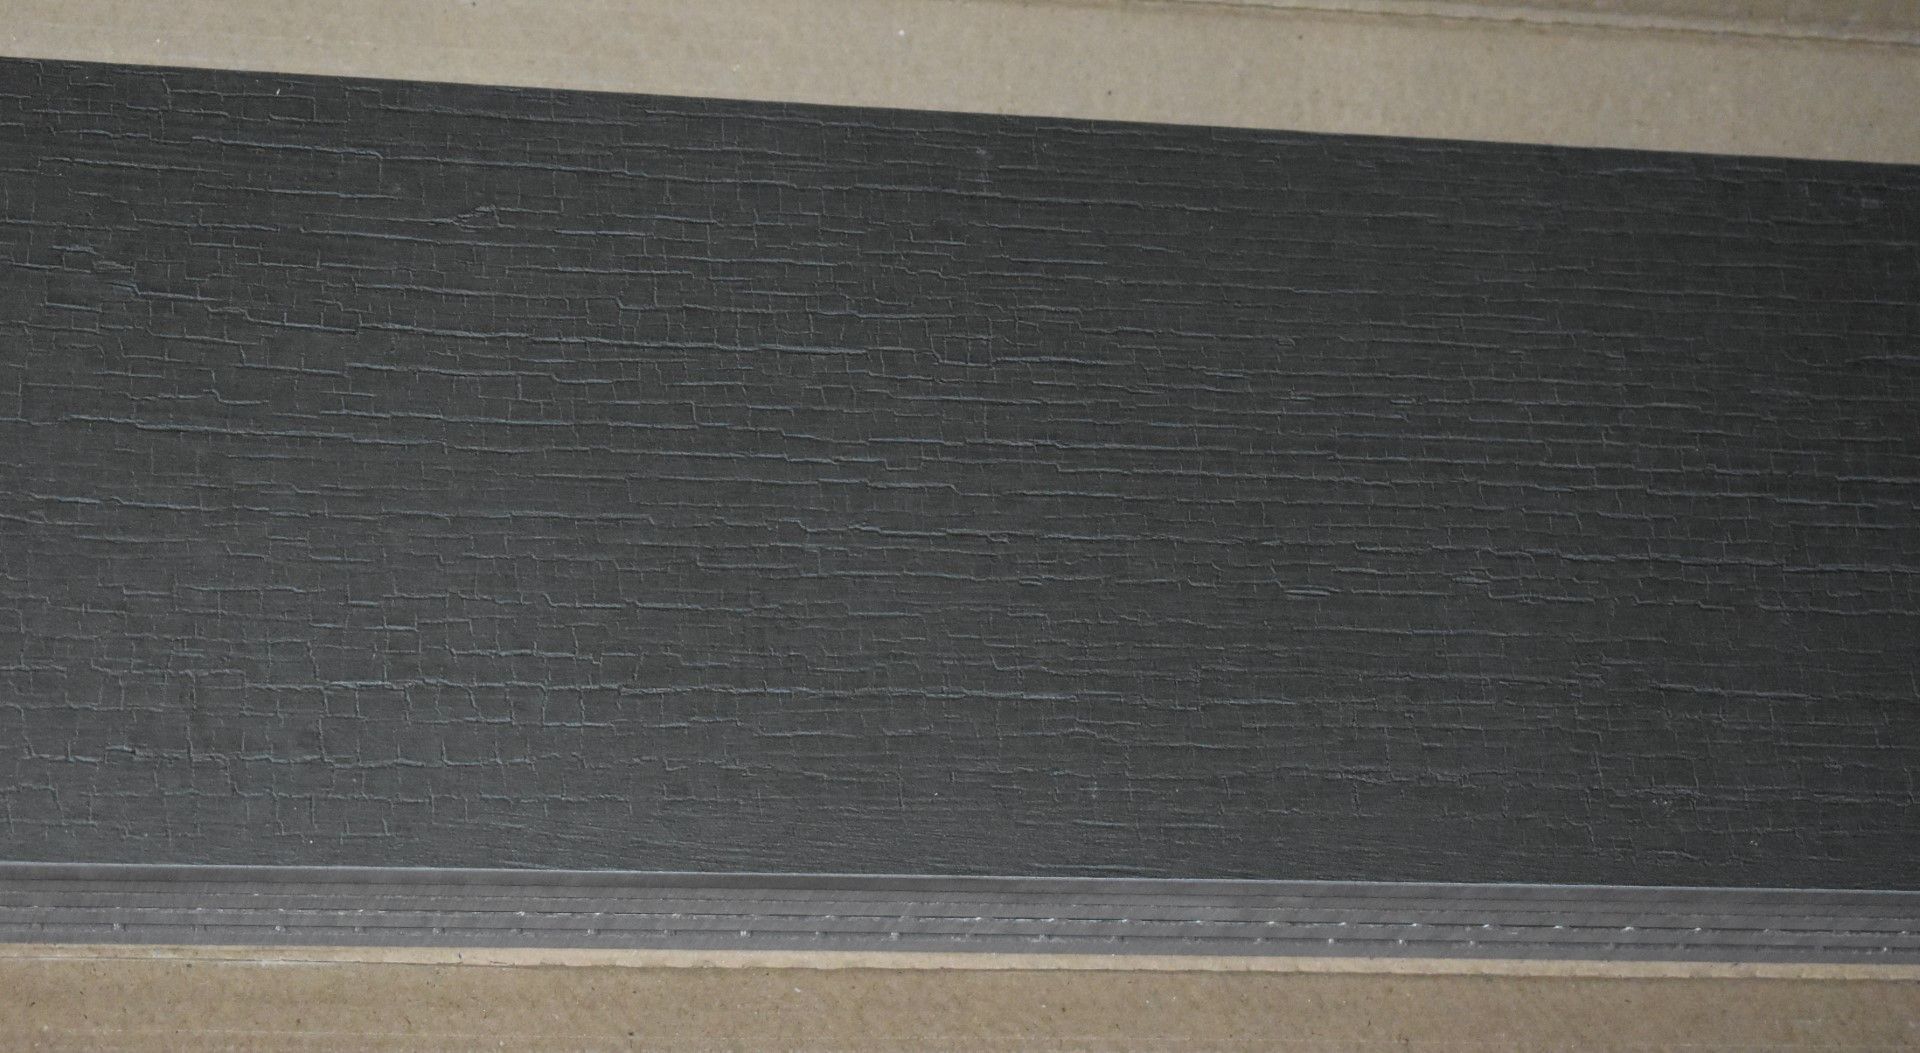 12 x Boxes of RAK Porcelain Floor or Wall Tiles - M Project Wood Design in Dark Grey - 19.5 x 120 cm - Image 3 of 11